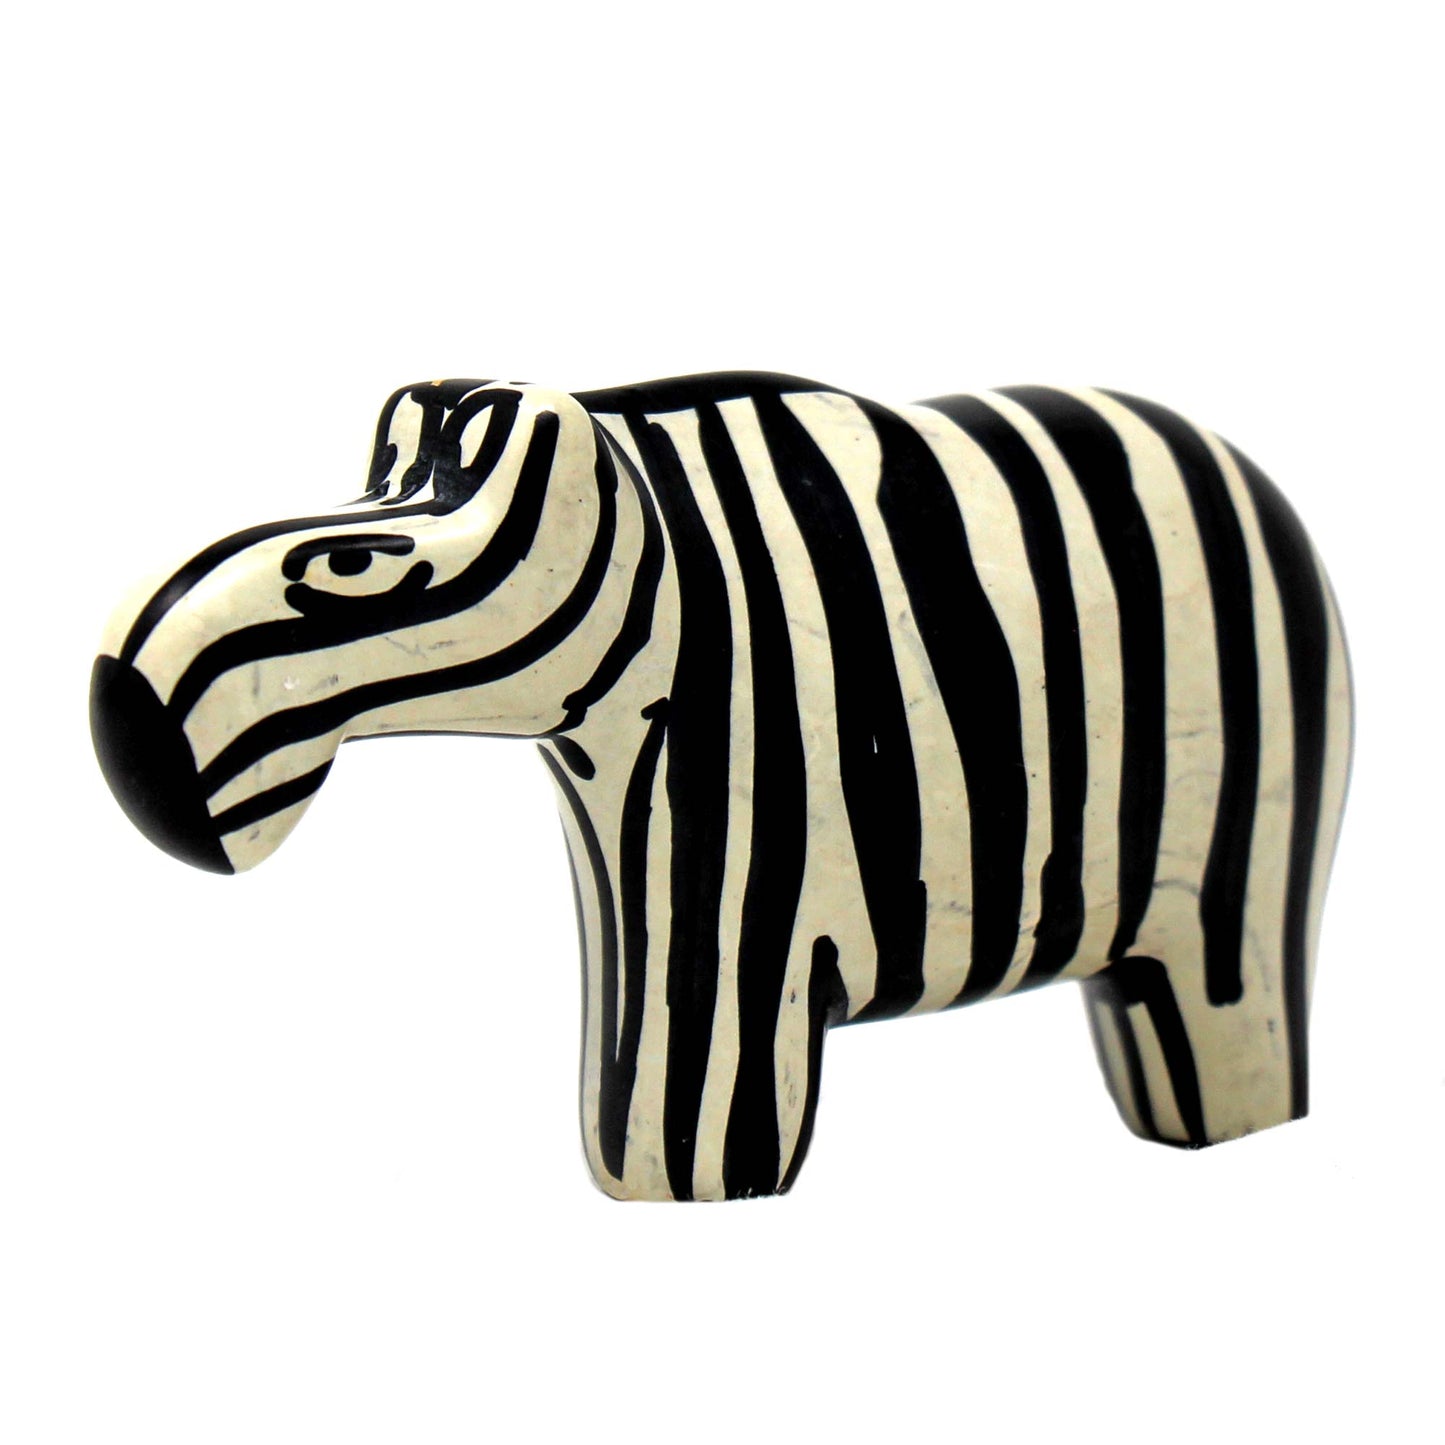 zebra-soapstone-sculptures-set-of-2